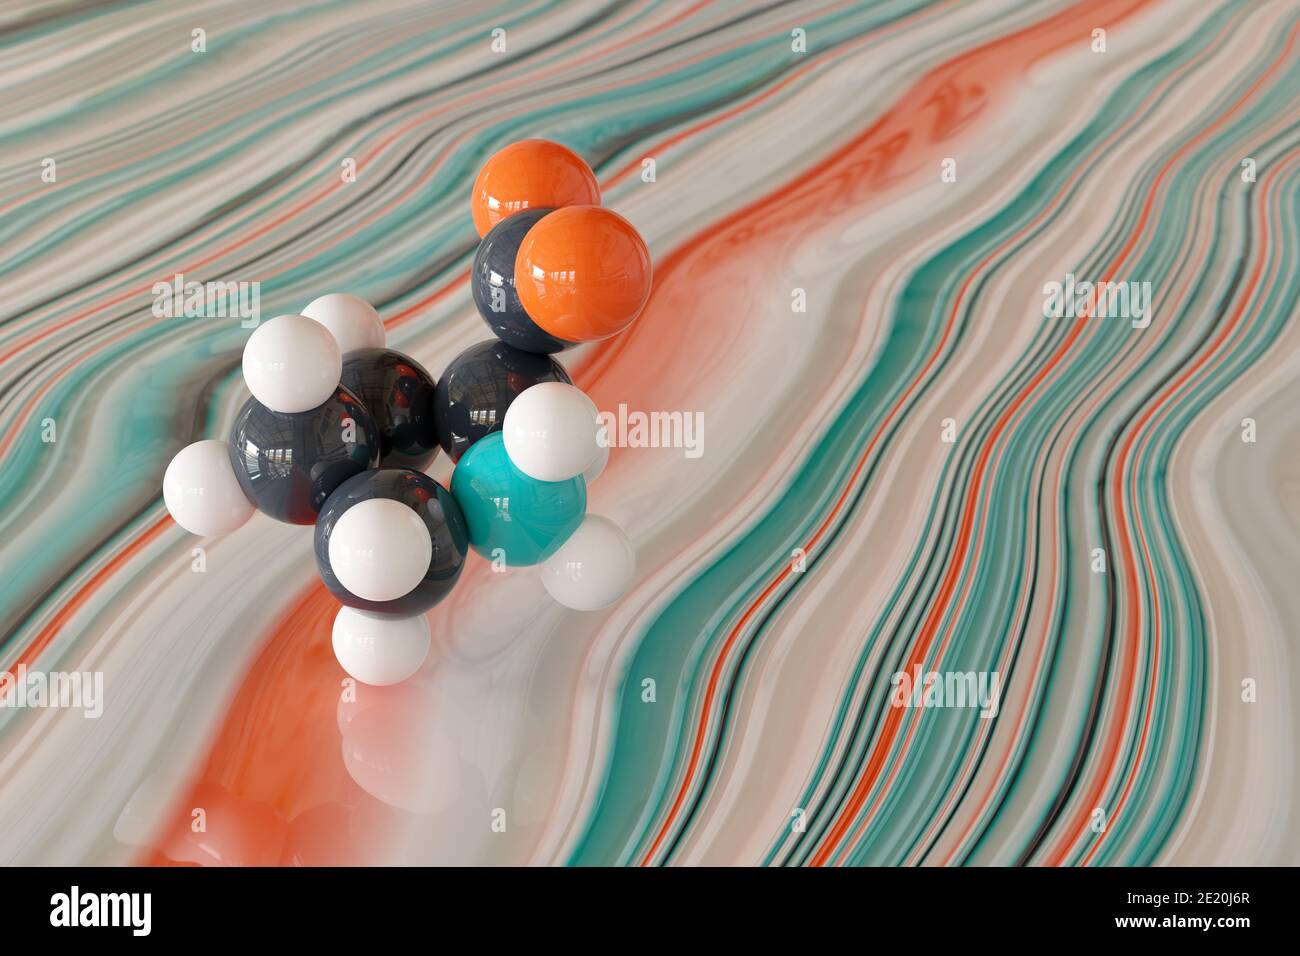 Proline (l-proline, Pro) amino acid molecule. 3D rendering. Scaled sphere molecular model shown floating just above a liquid paint surface. Color codi Stock Photo